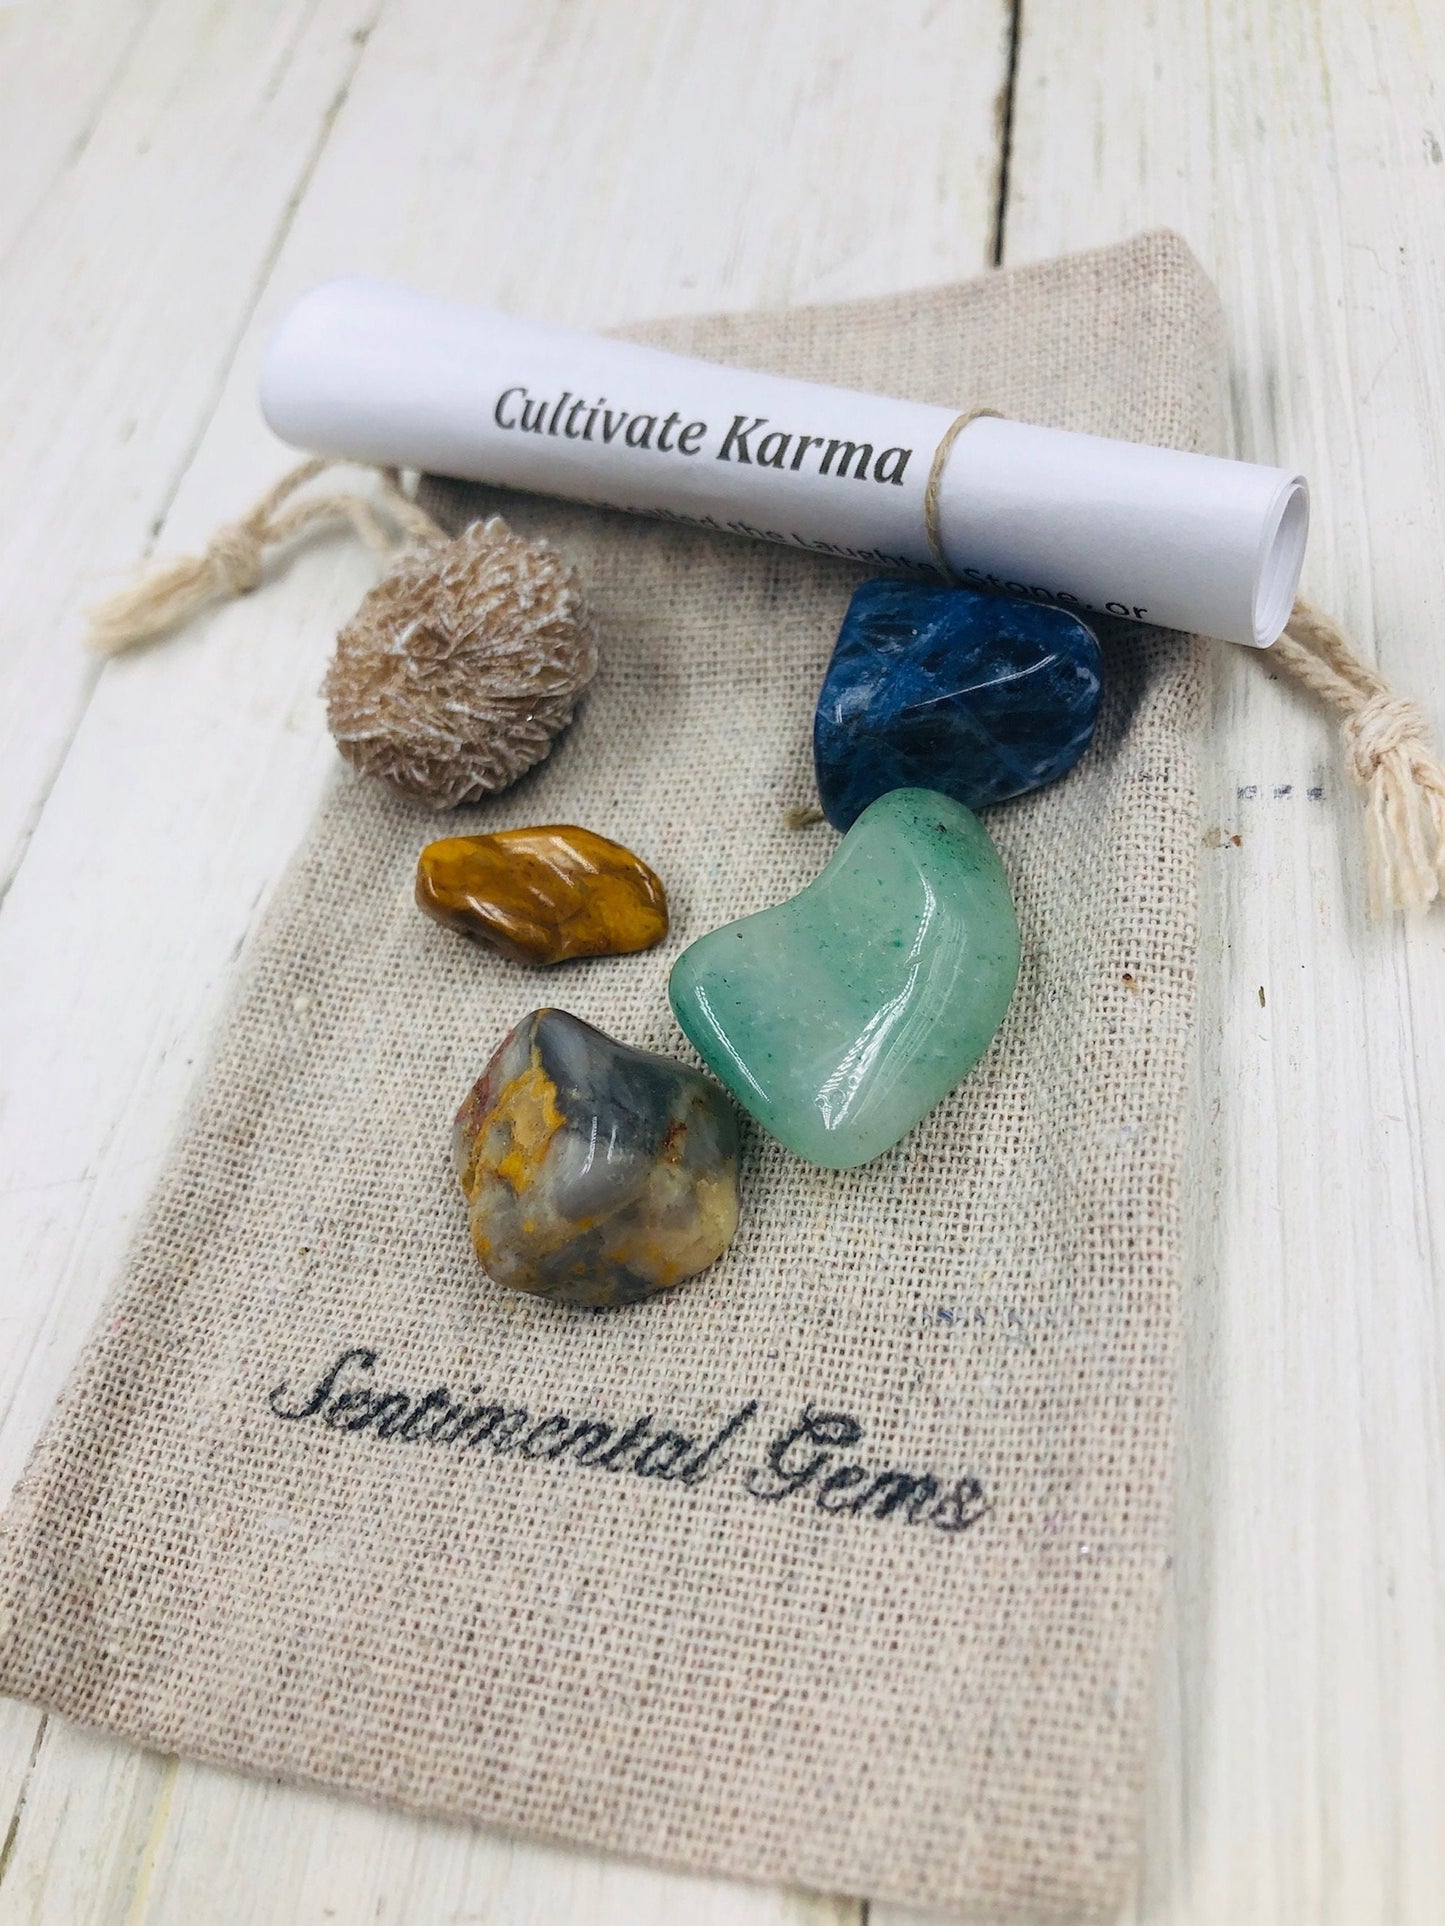 Cultivate Karma Crystal Kit: Crystals for Karma